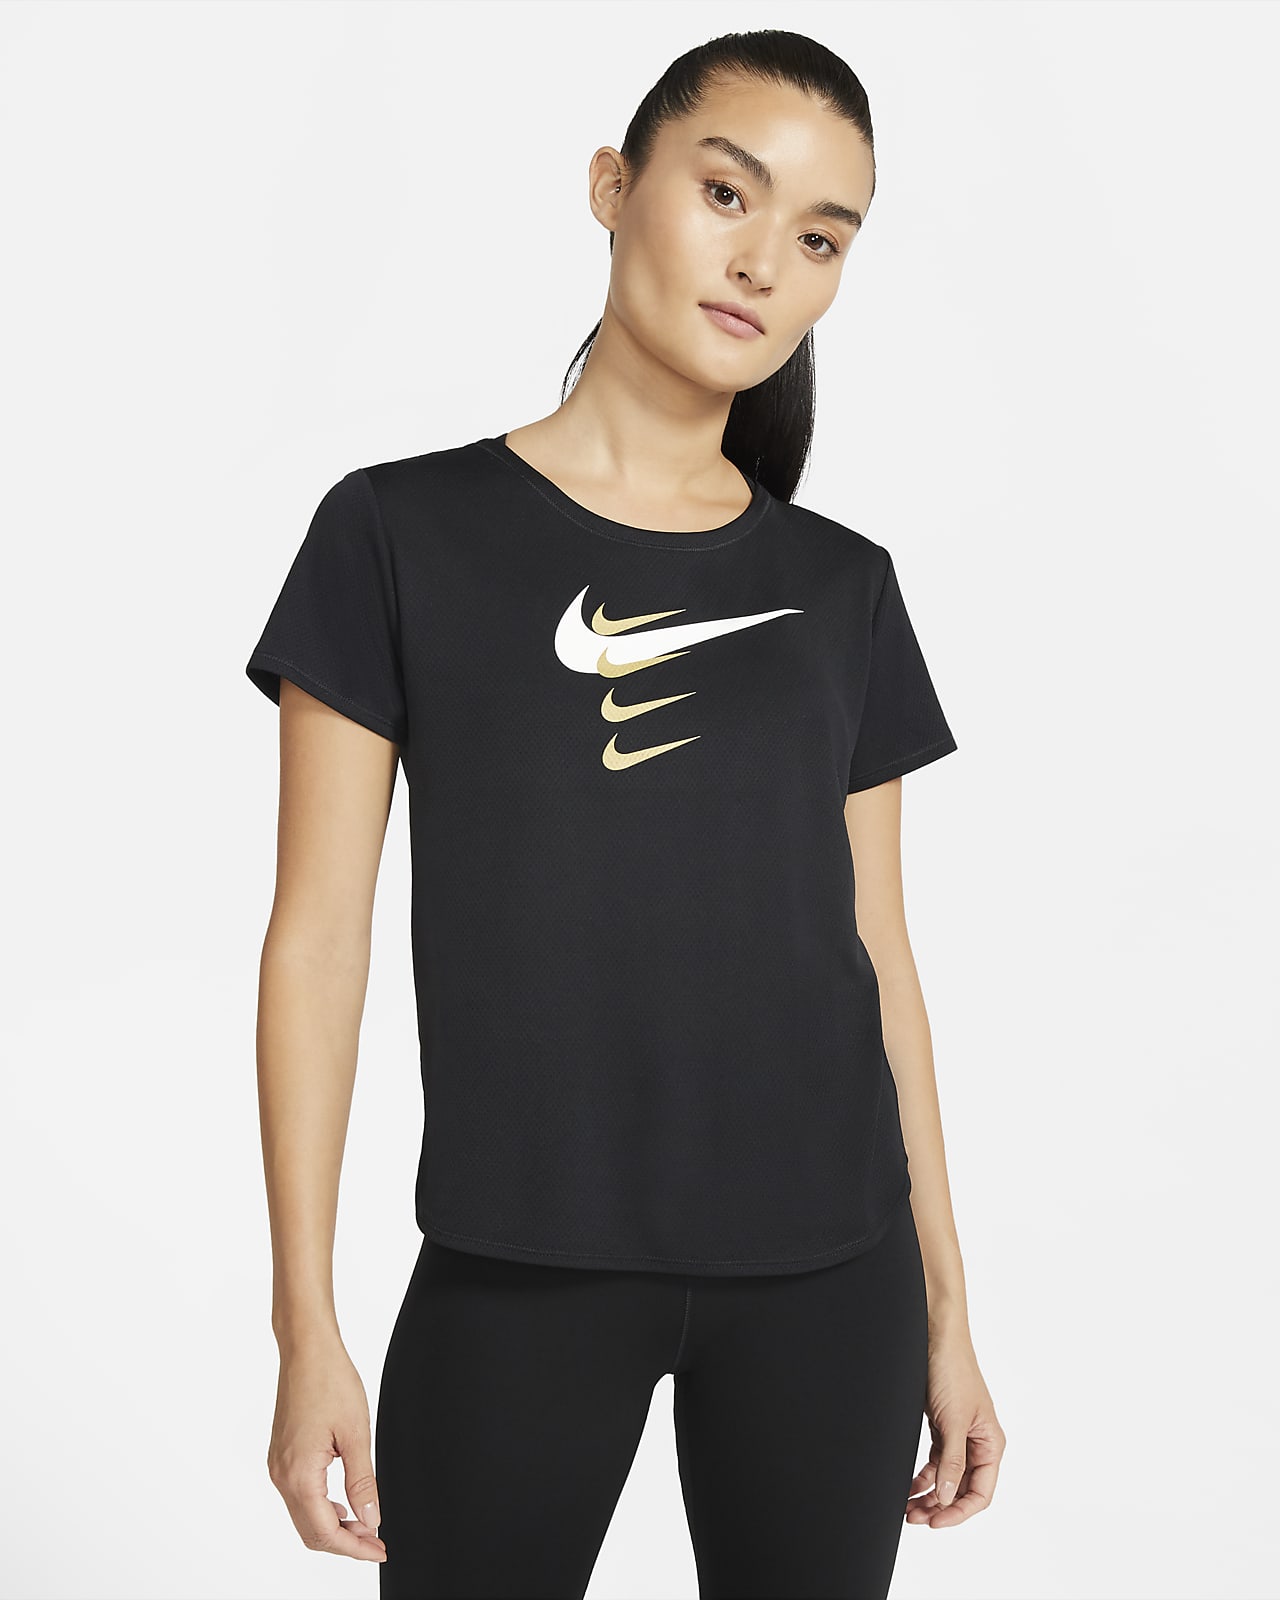 Short-Sleeve Running Top. Nike SG